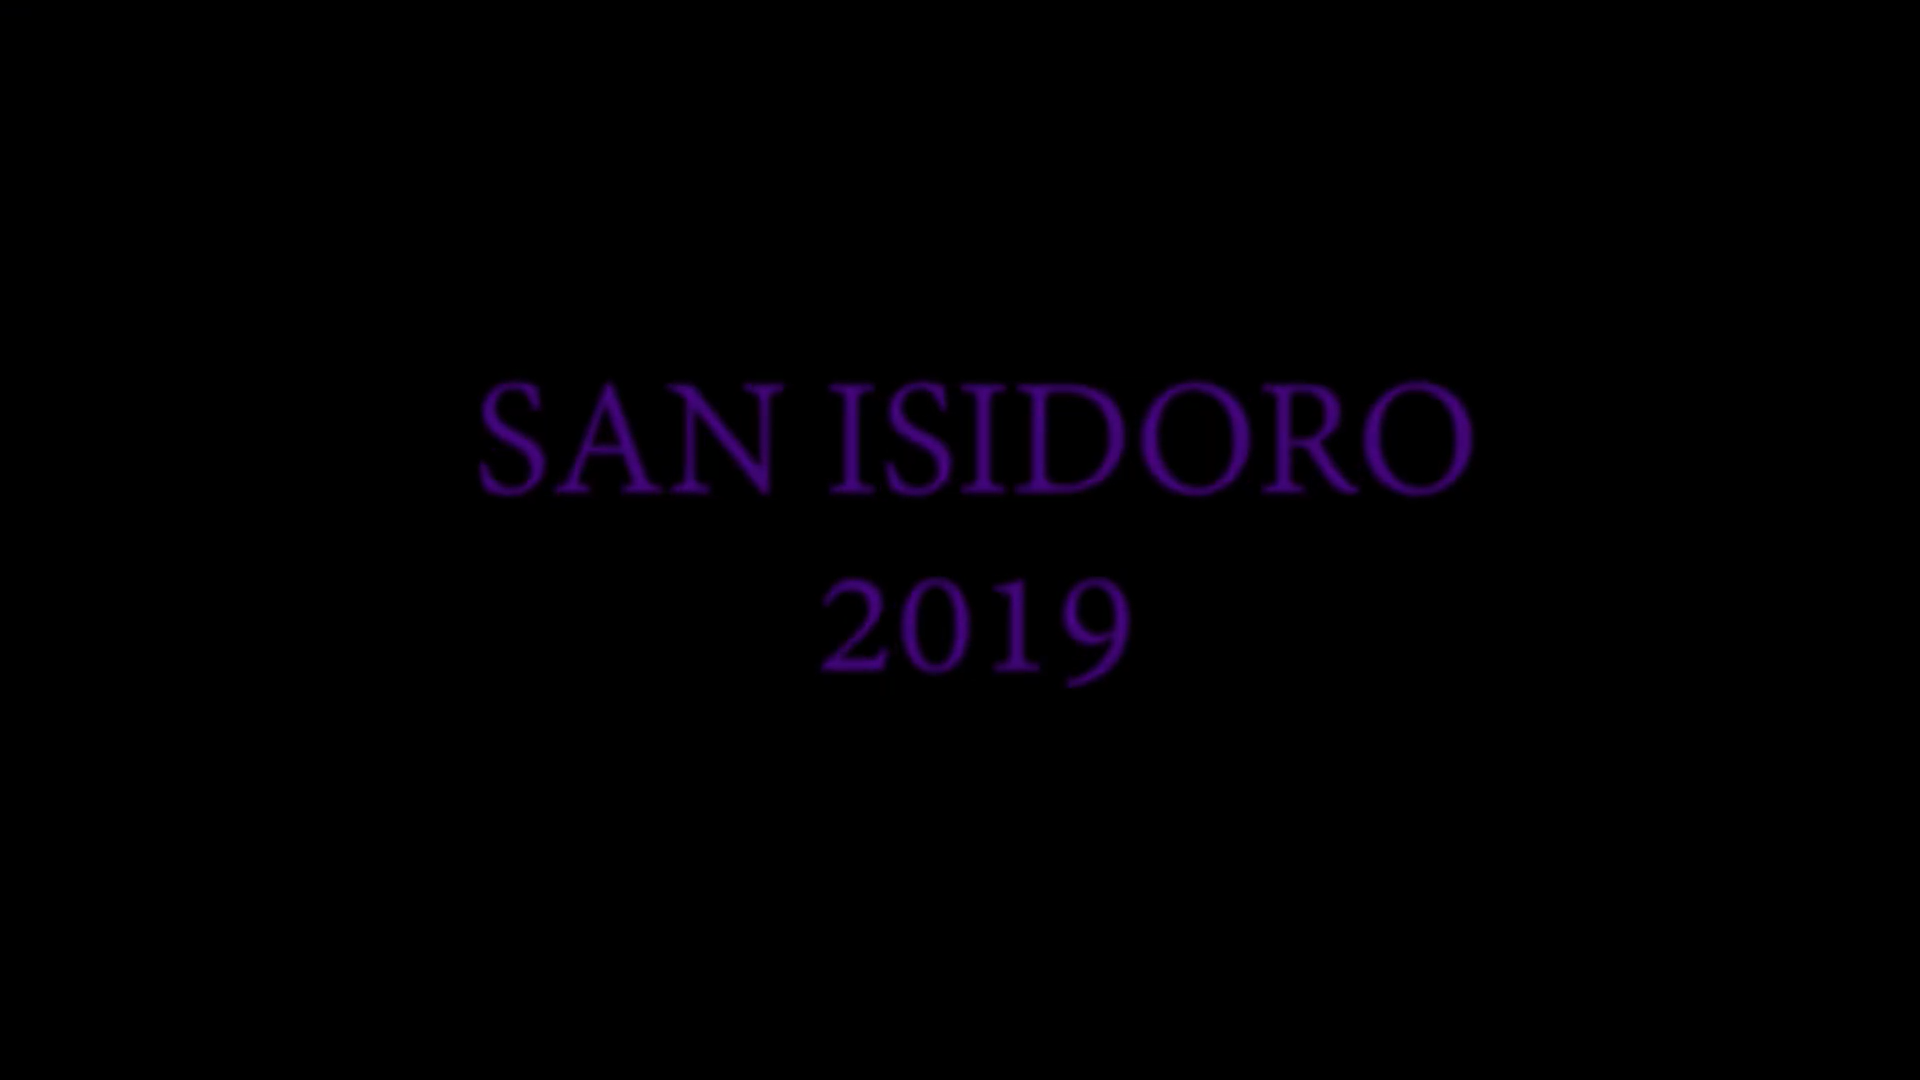 Celebración de San Isidoro 2019